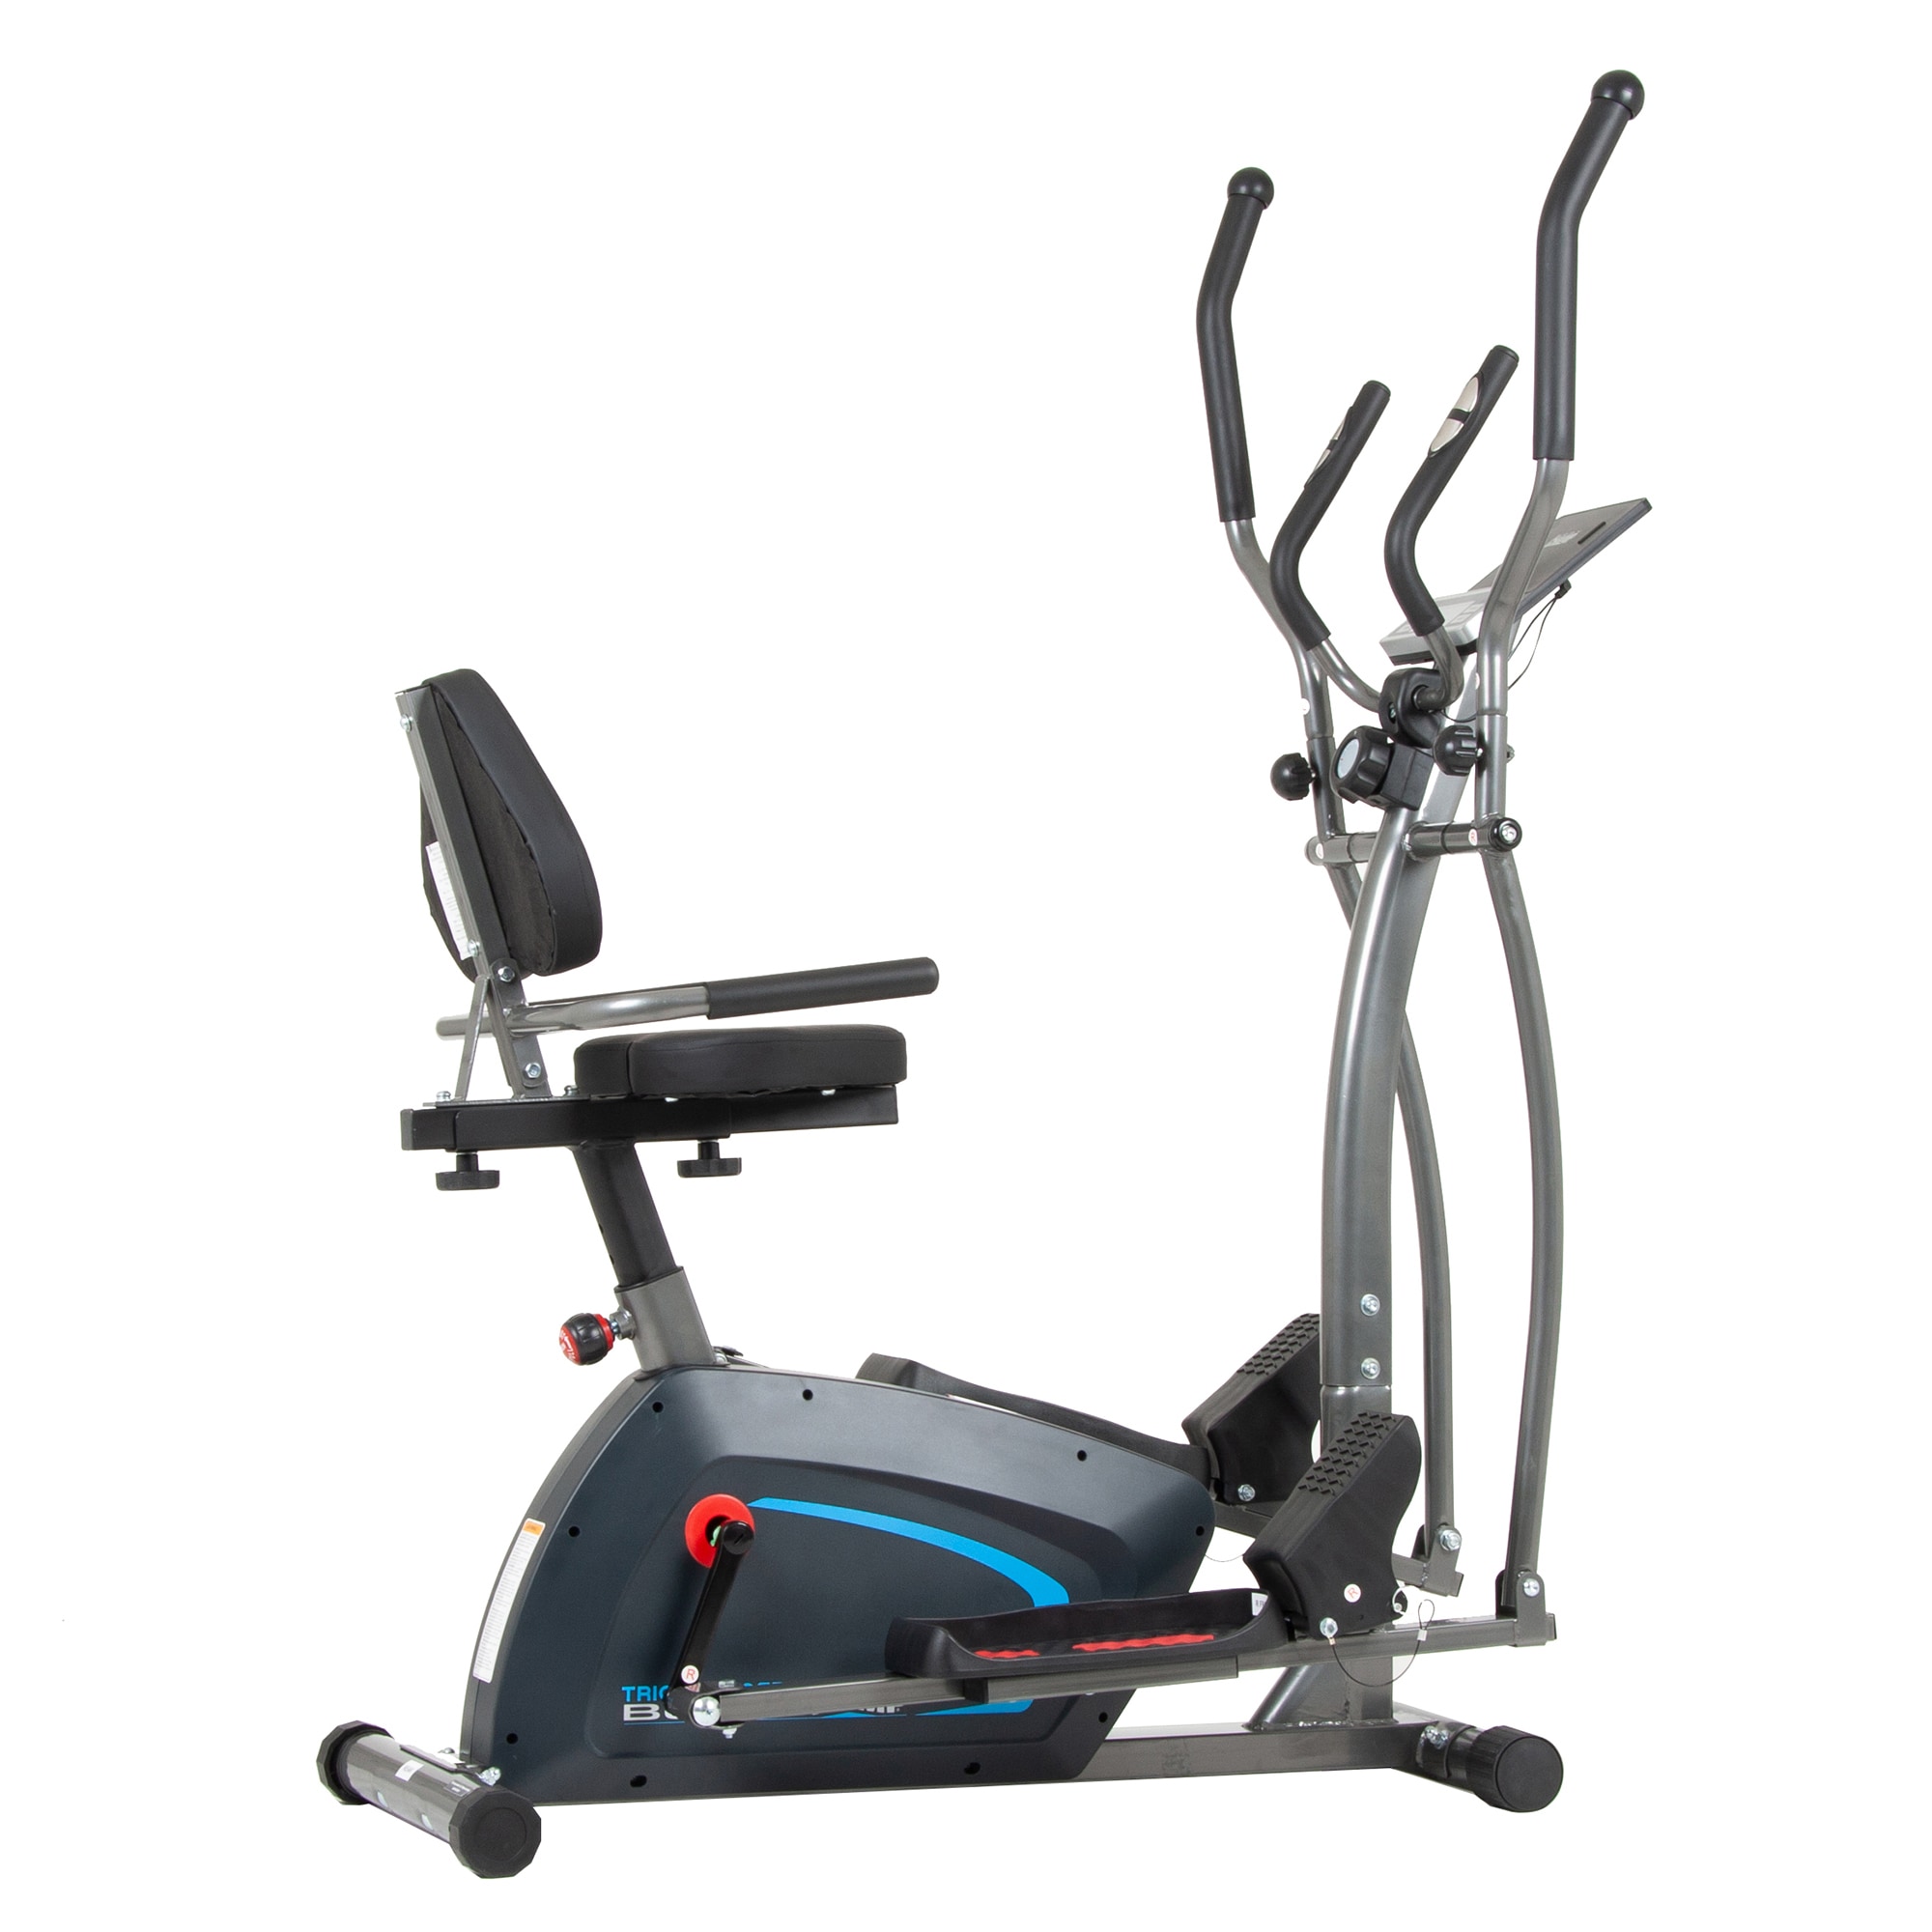 Elliptical Exercise Bike Elliptical Exercise Machine Eliptical Cross Trainer New 